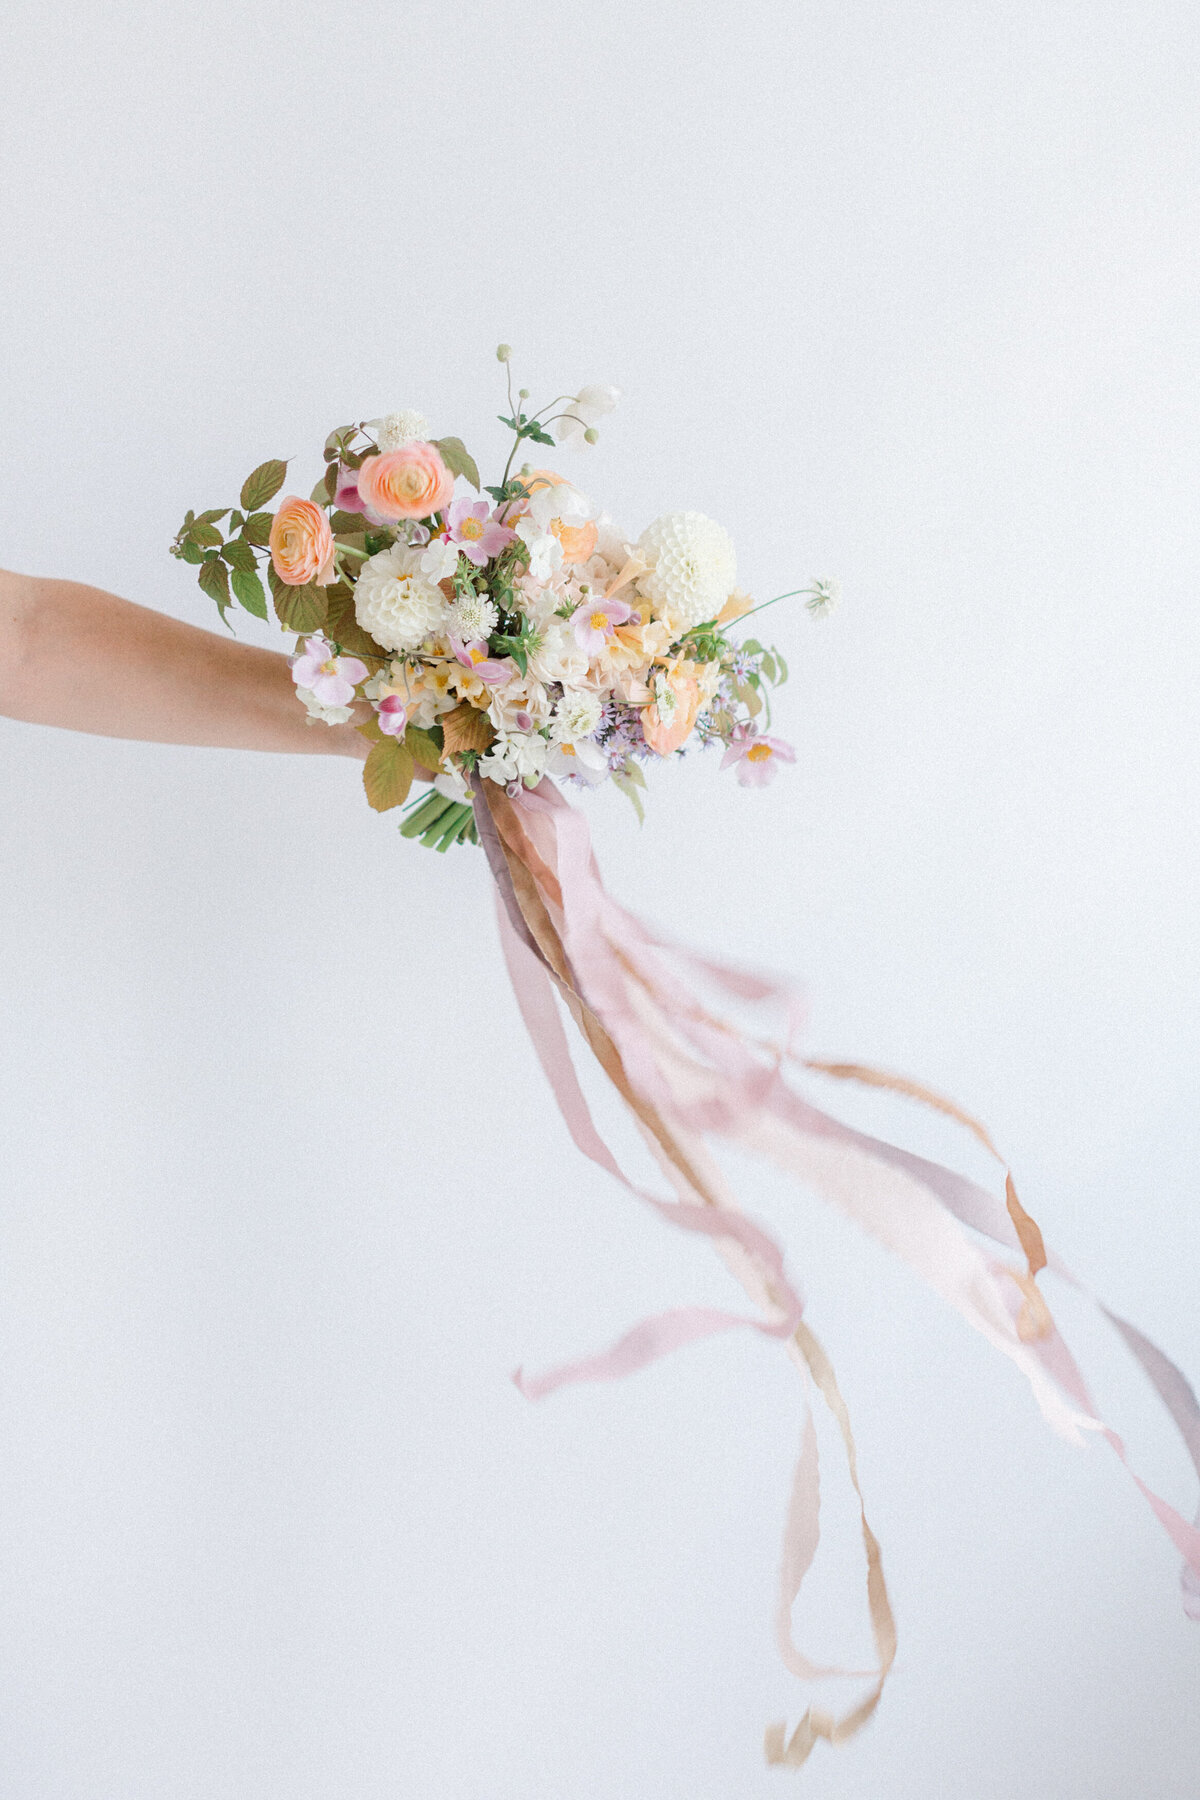 Atelier-Carmel-Wedding-Florist-GALLERY-Bridal-50